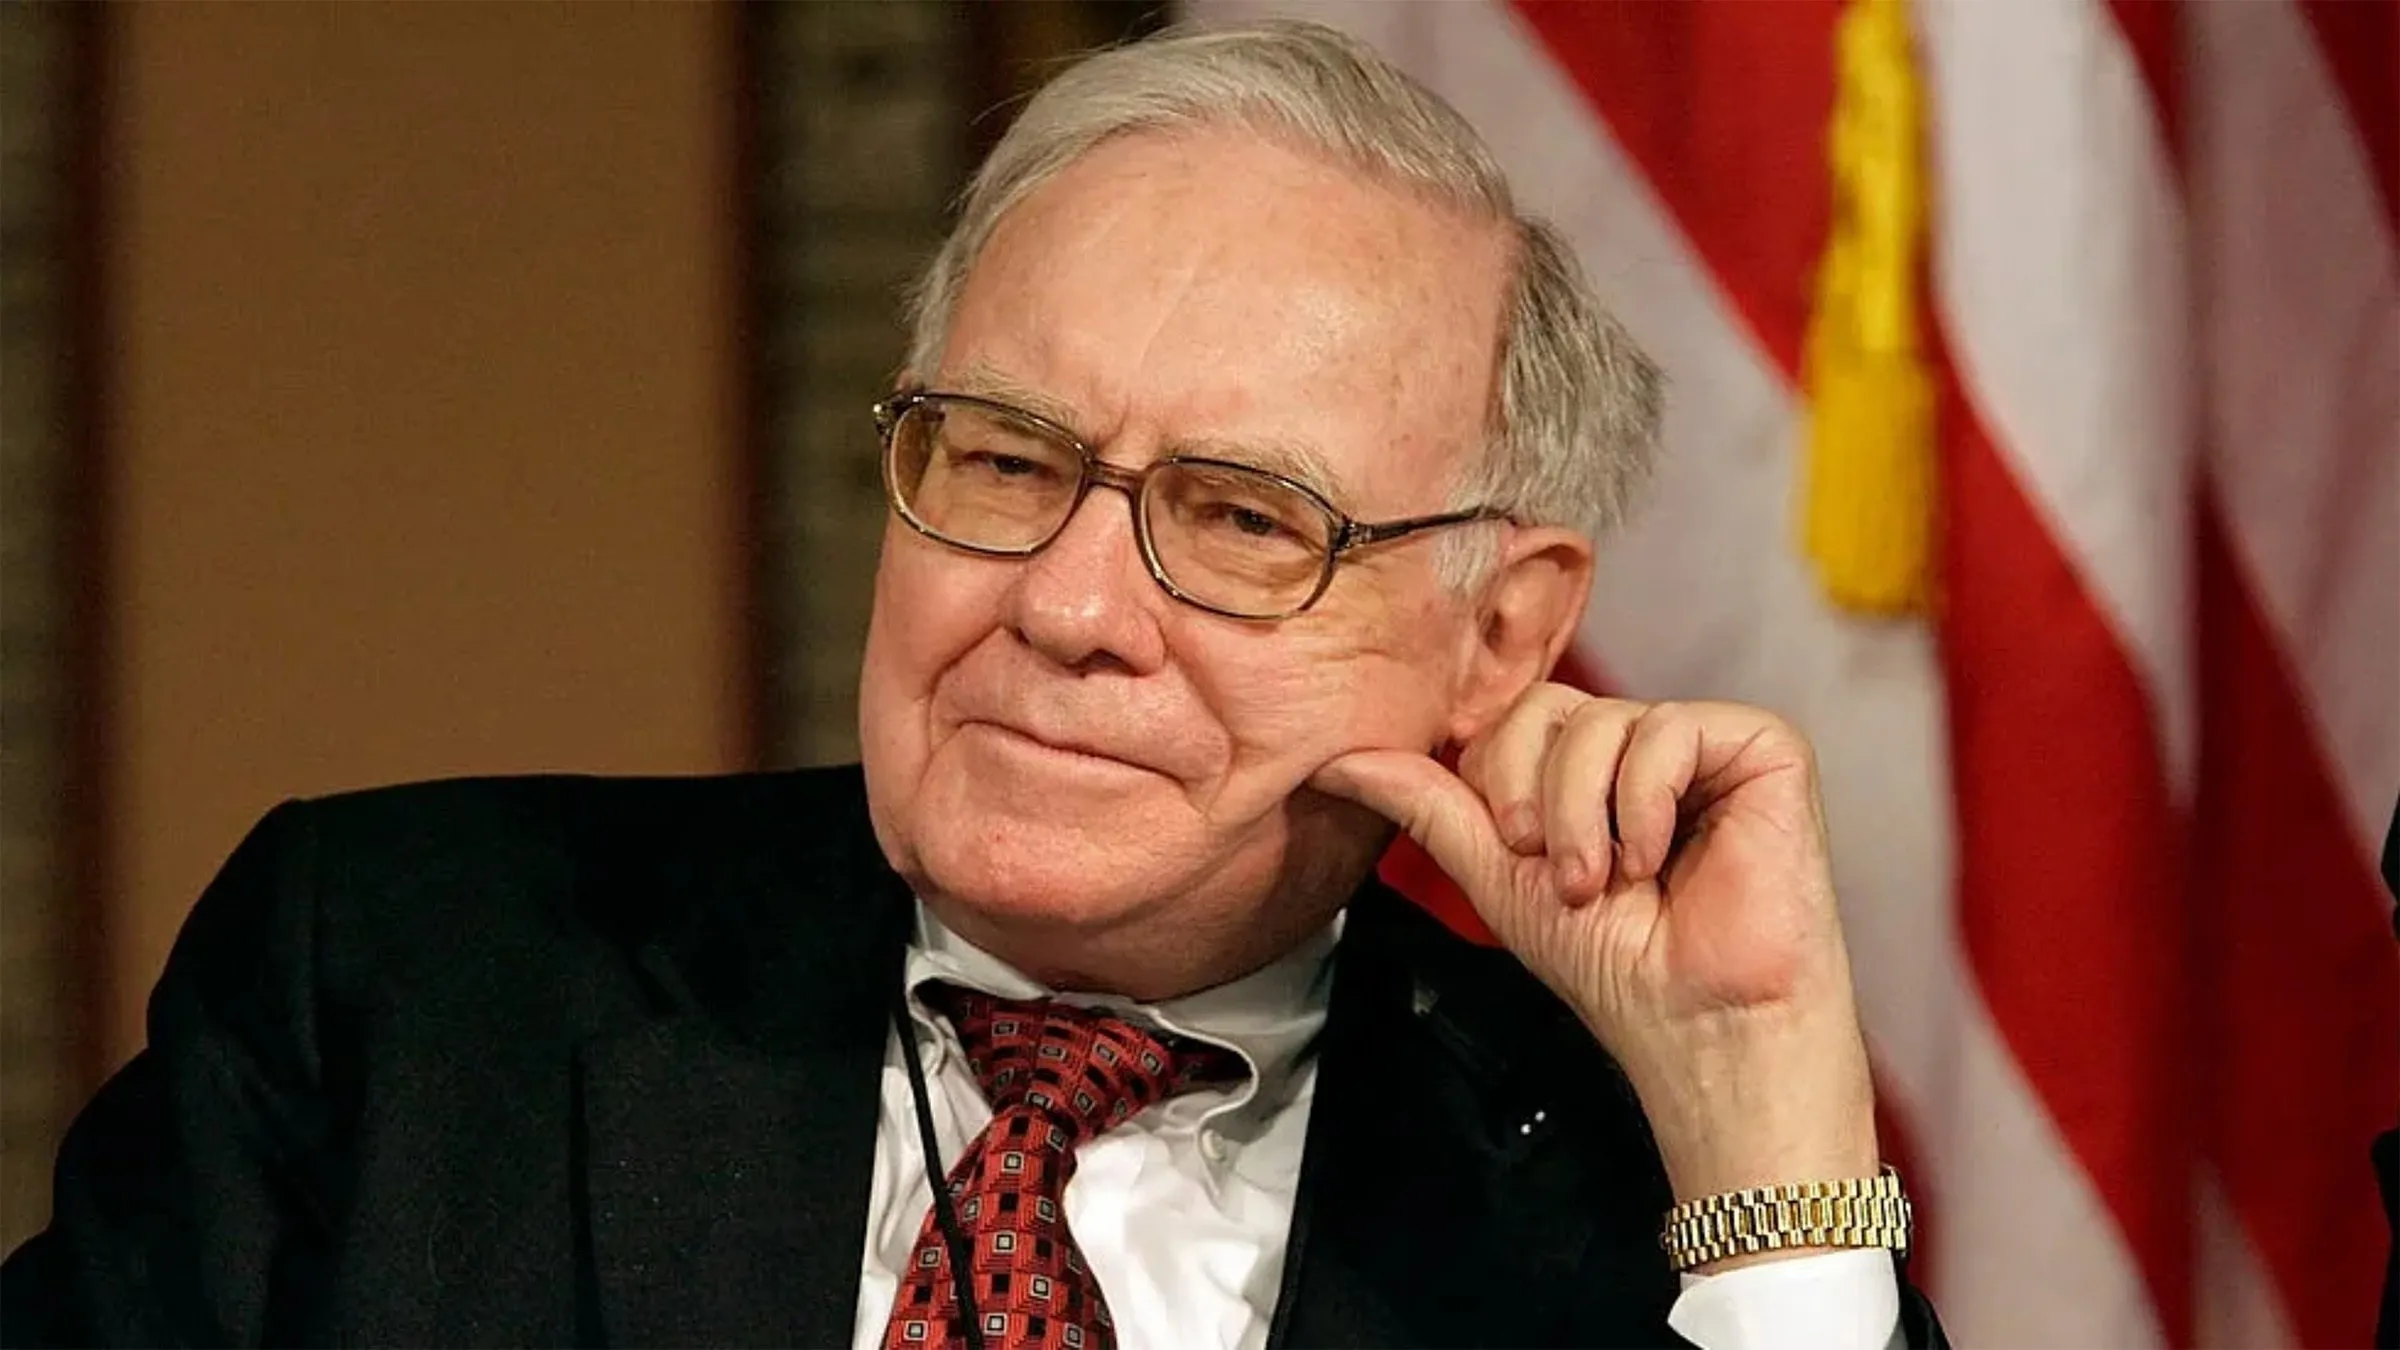 Warren Buffett, founder, chairman and CEO of Berkshire Hathaway. Image: Photosince/Shutterstock